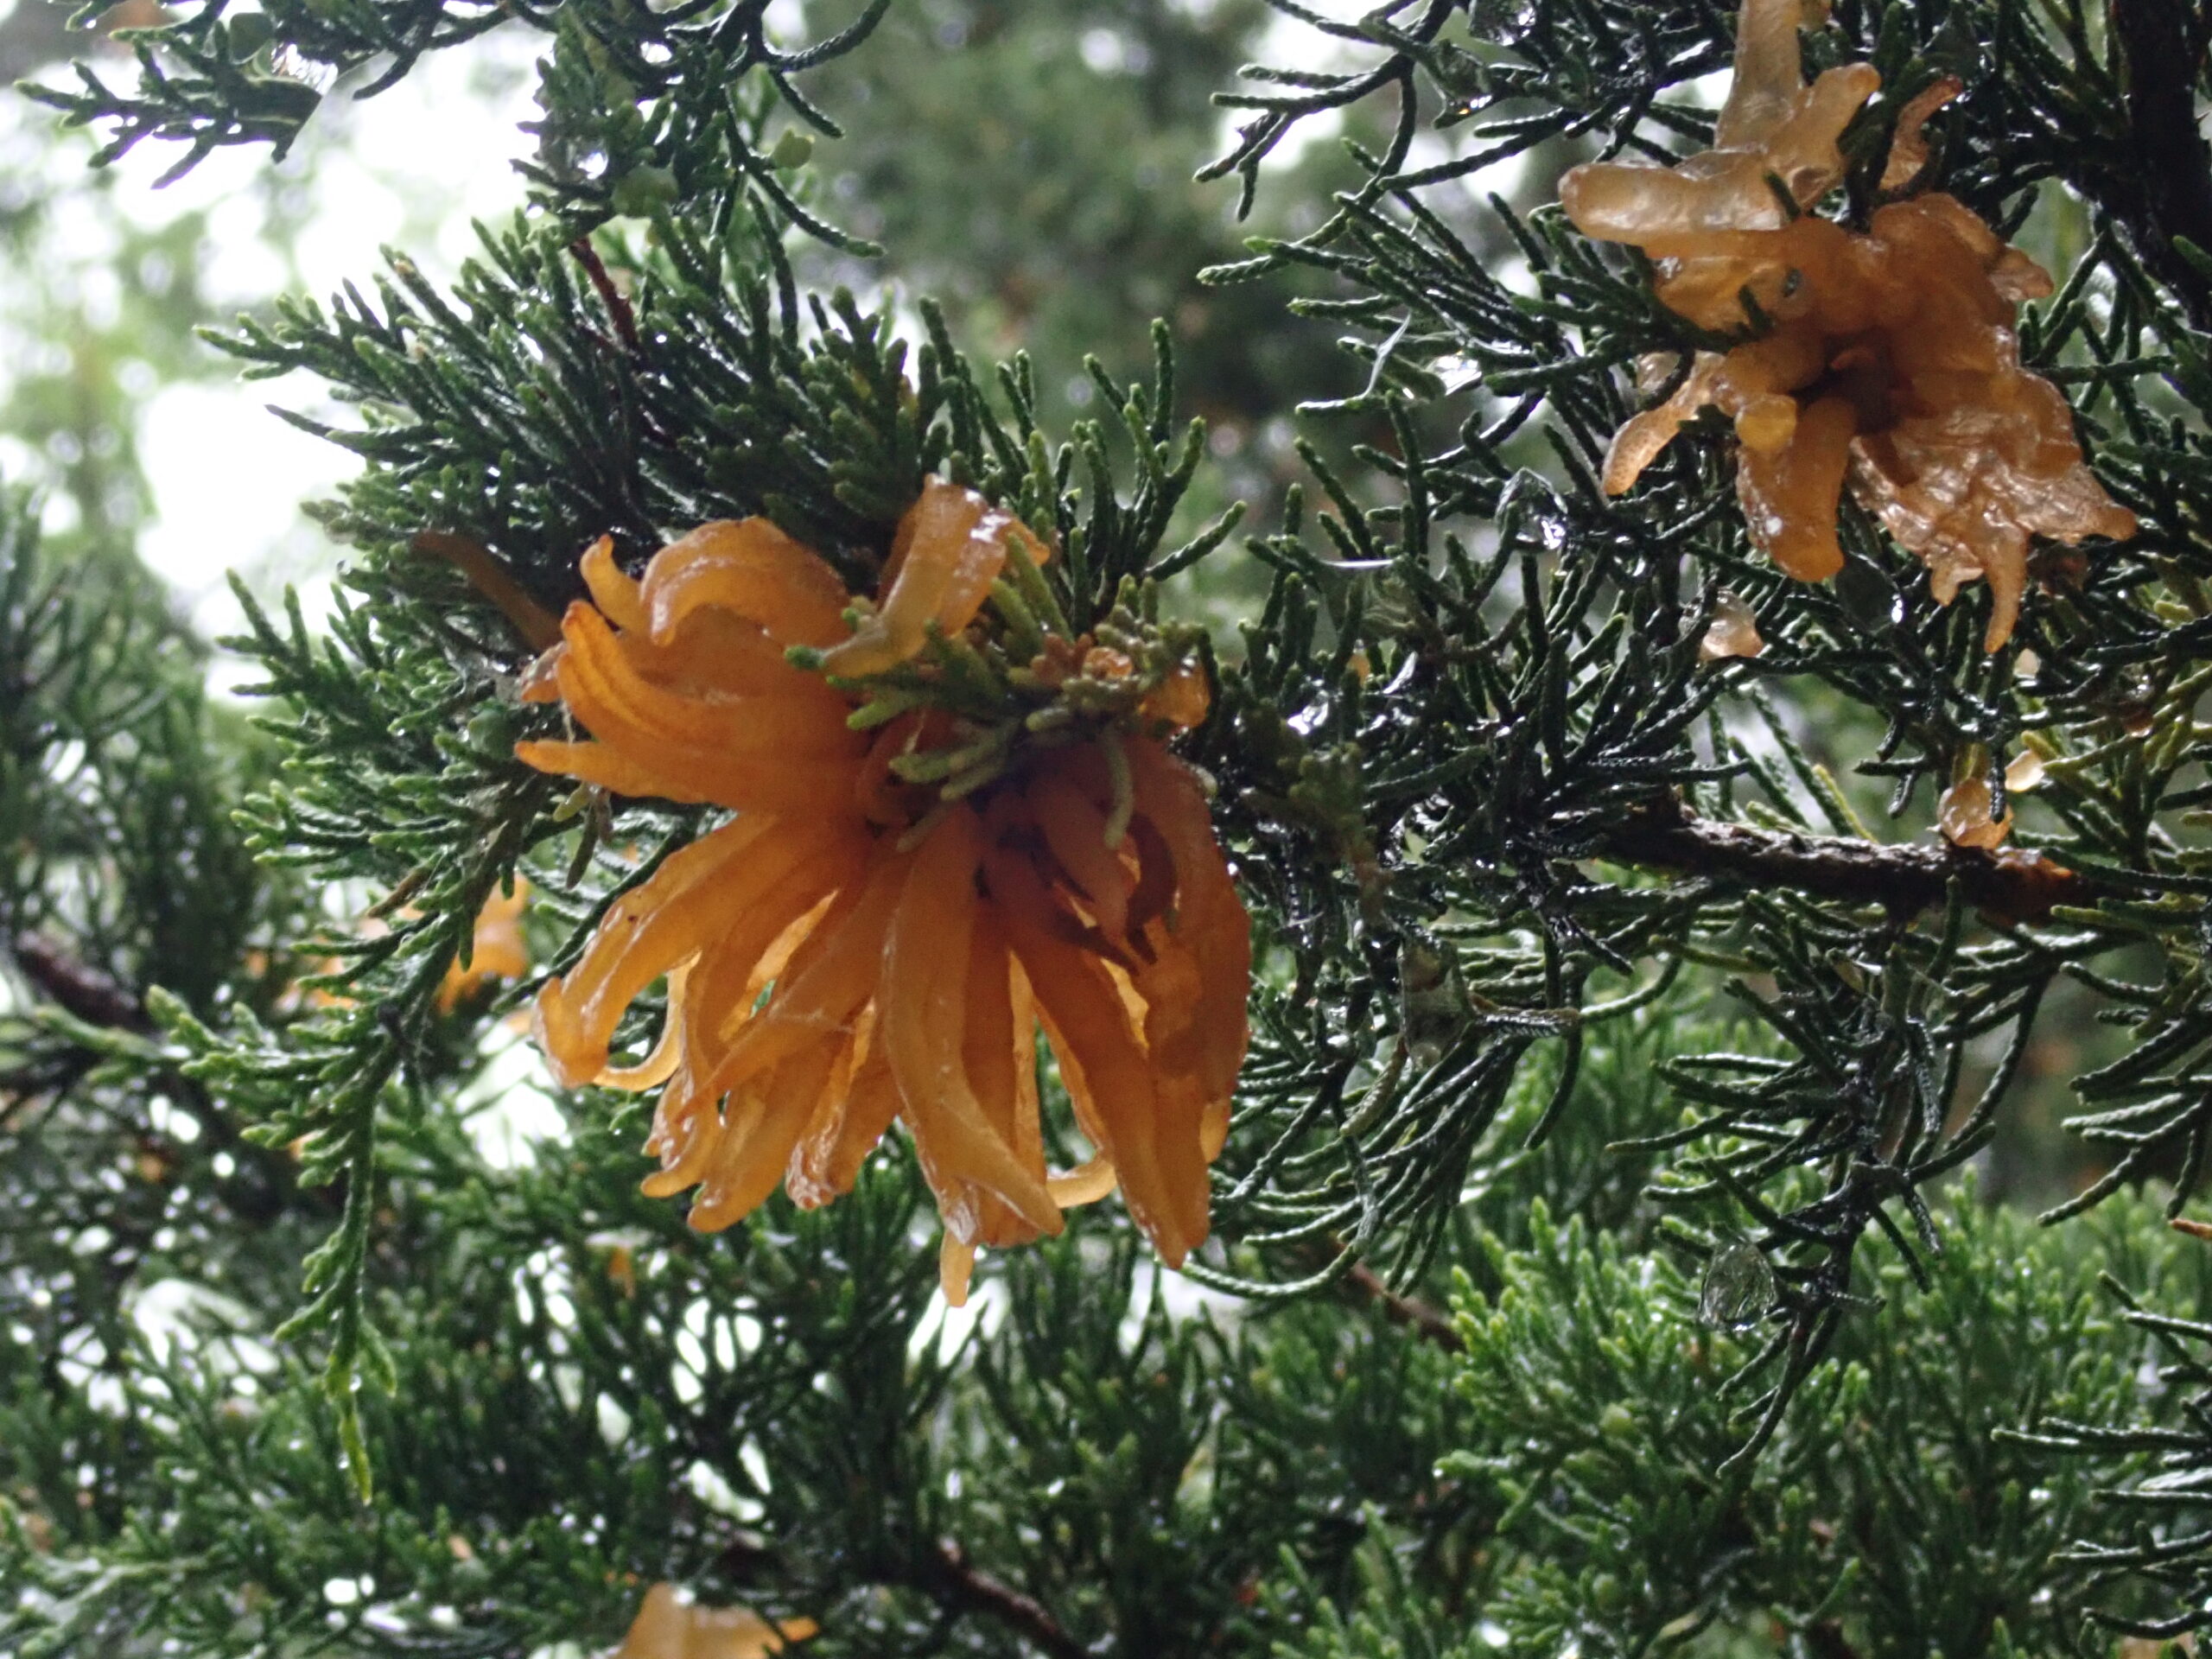 Orange jelly-like horns extending 1/2 inch long and 1/8 inch in diameter on cedar